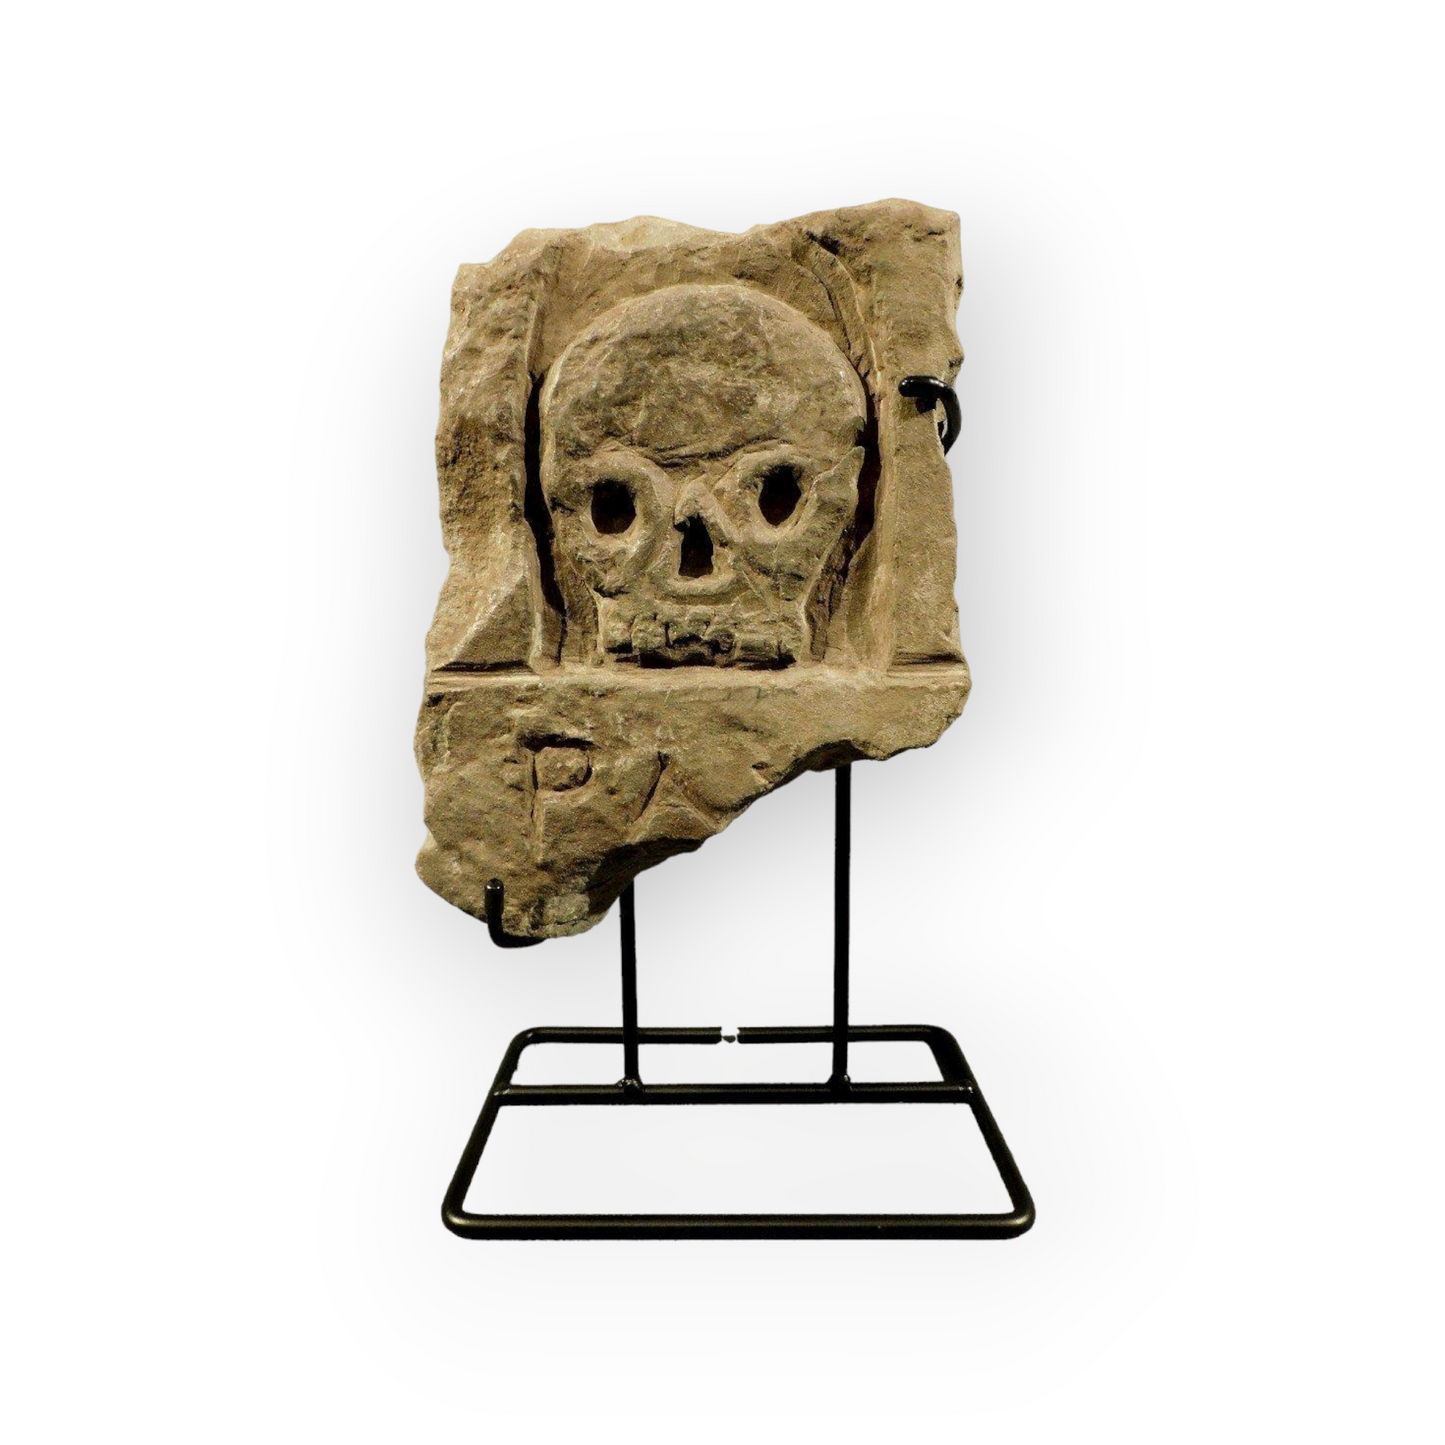 16th Century Italian Antique Carved Stone Memento Mori - Possibly a Gravestone Fragment